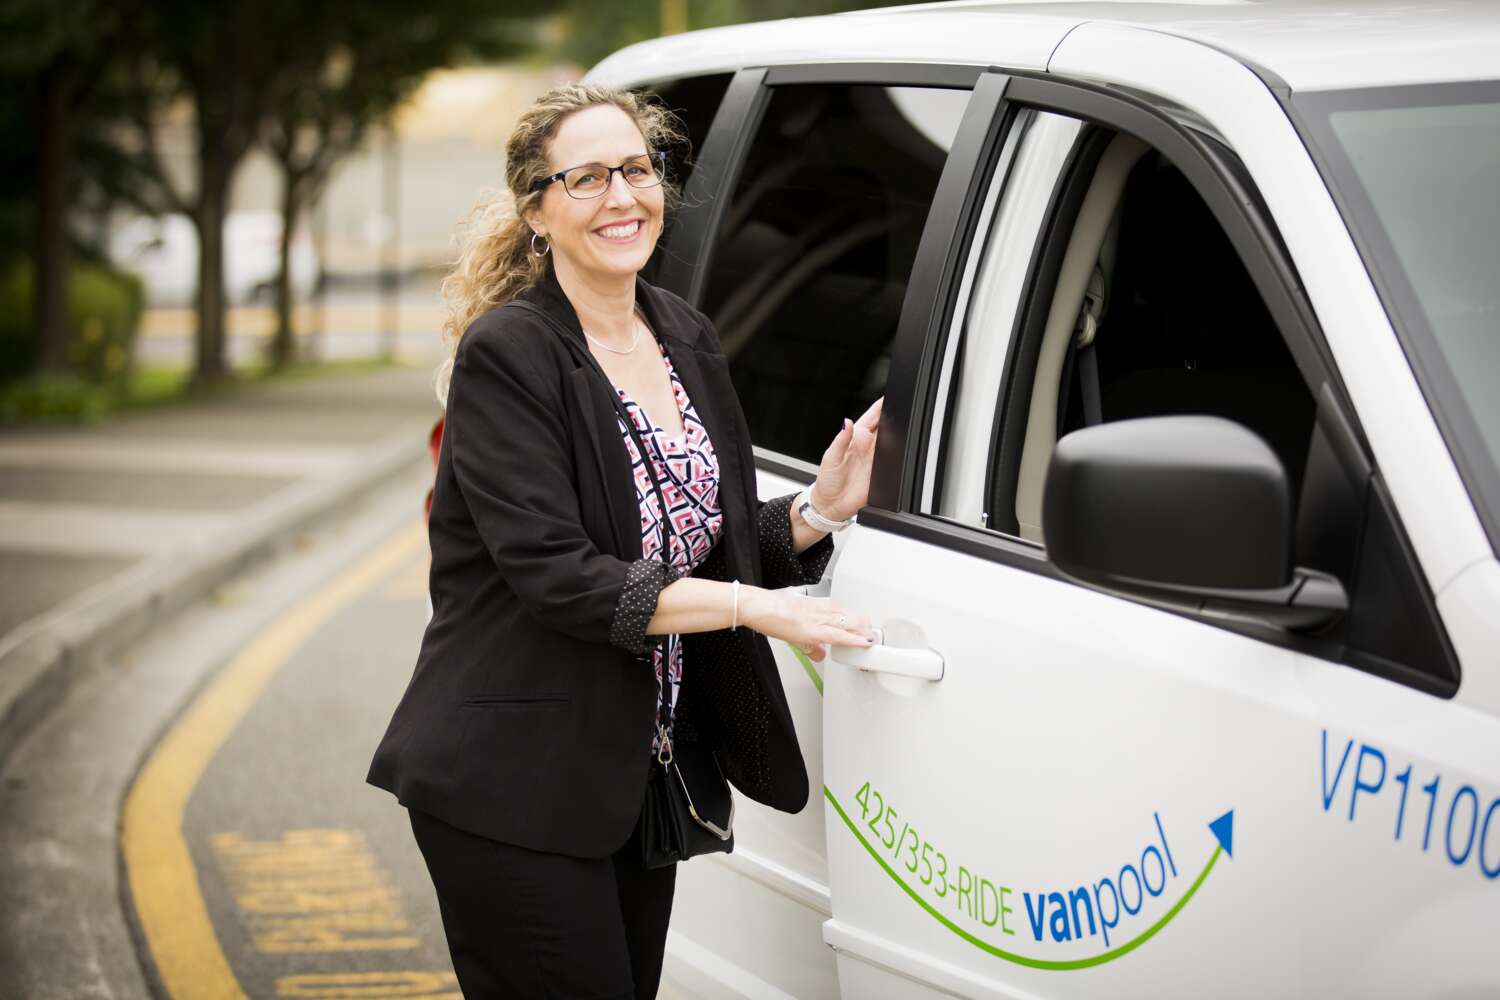 Woman enters a Community Transit vanpool van